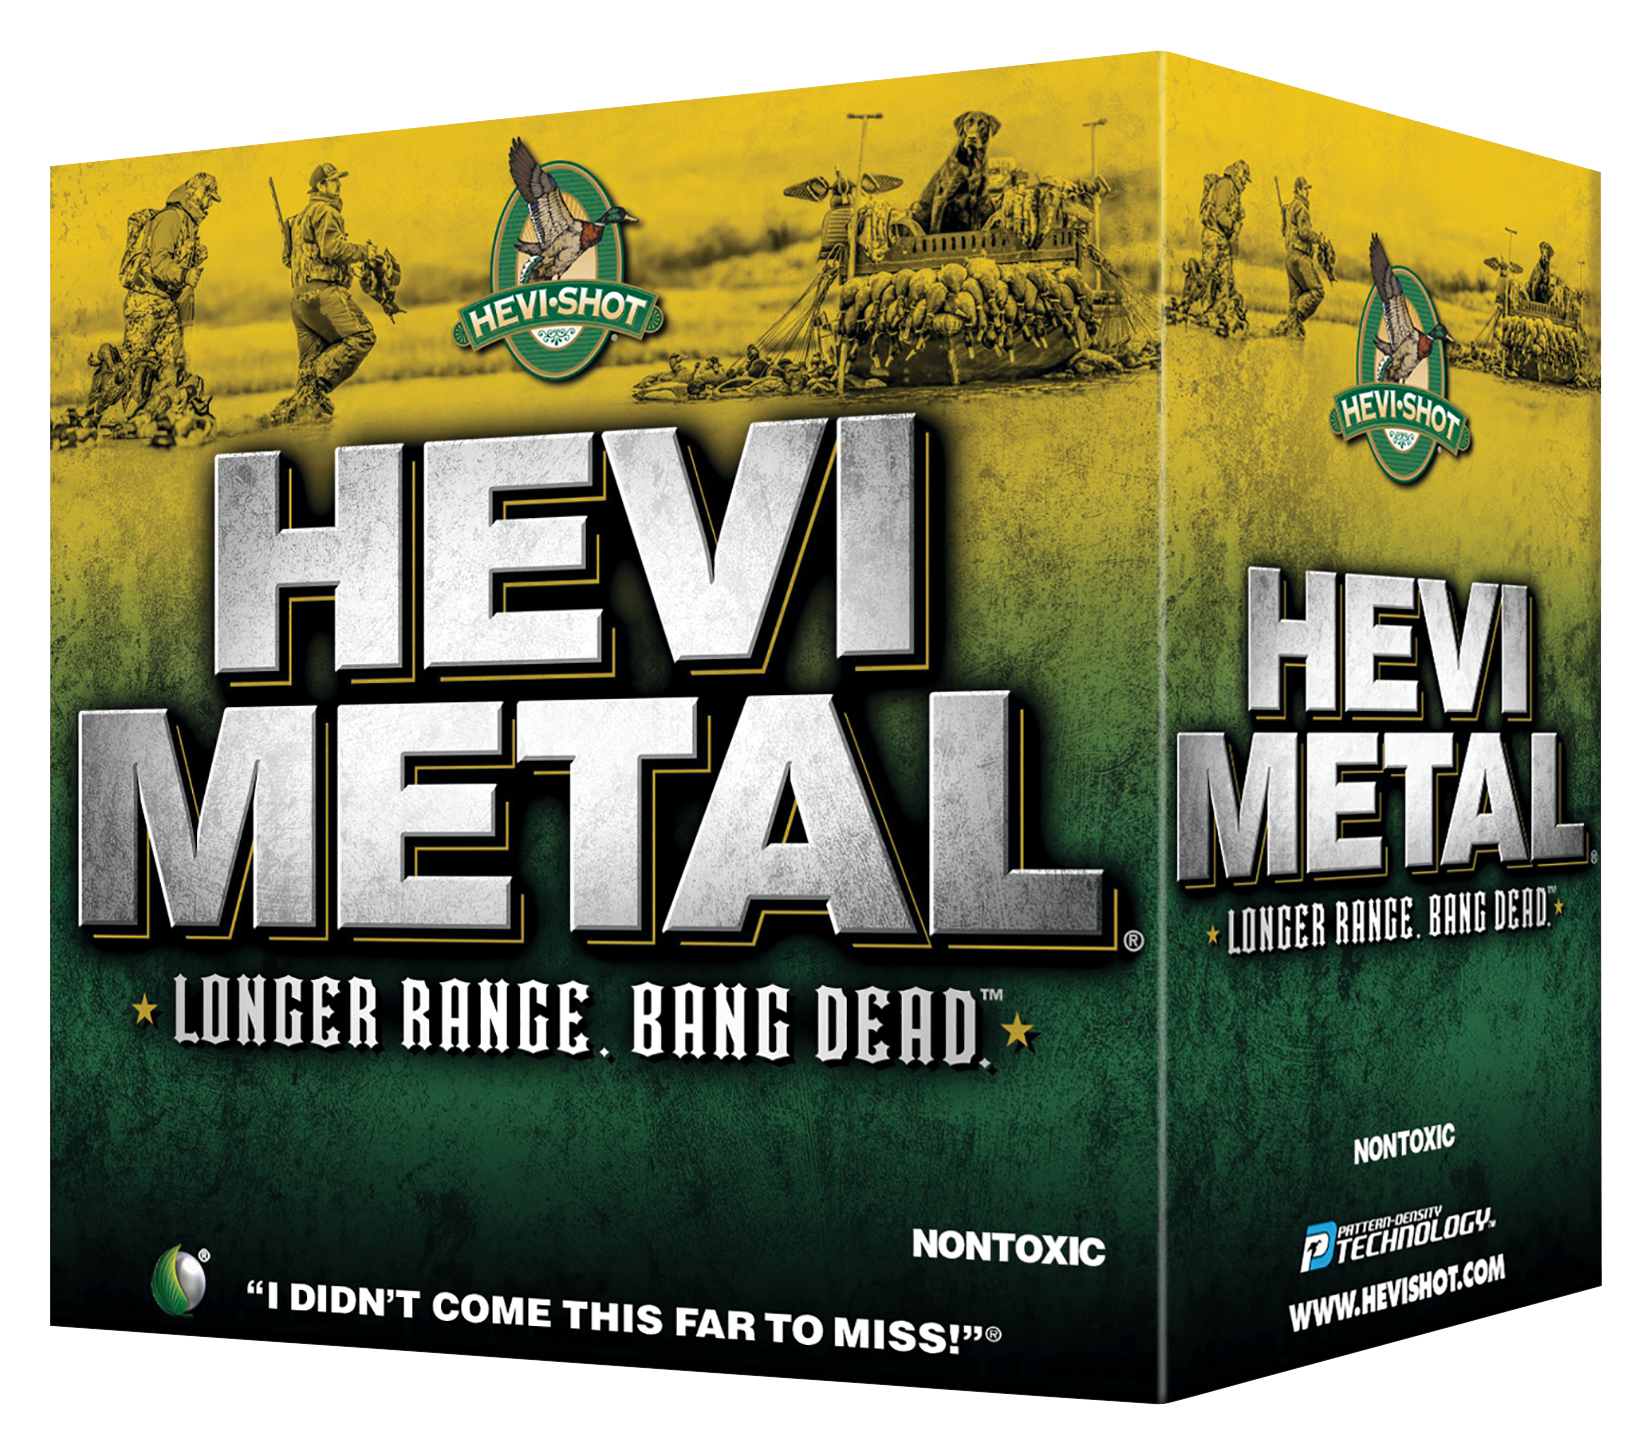 Hevi-Shot HEVI-Metal Longer Range Shotgun Shells - 12 Gauge - #4 - 2.75"" - 25 Rounds